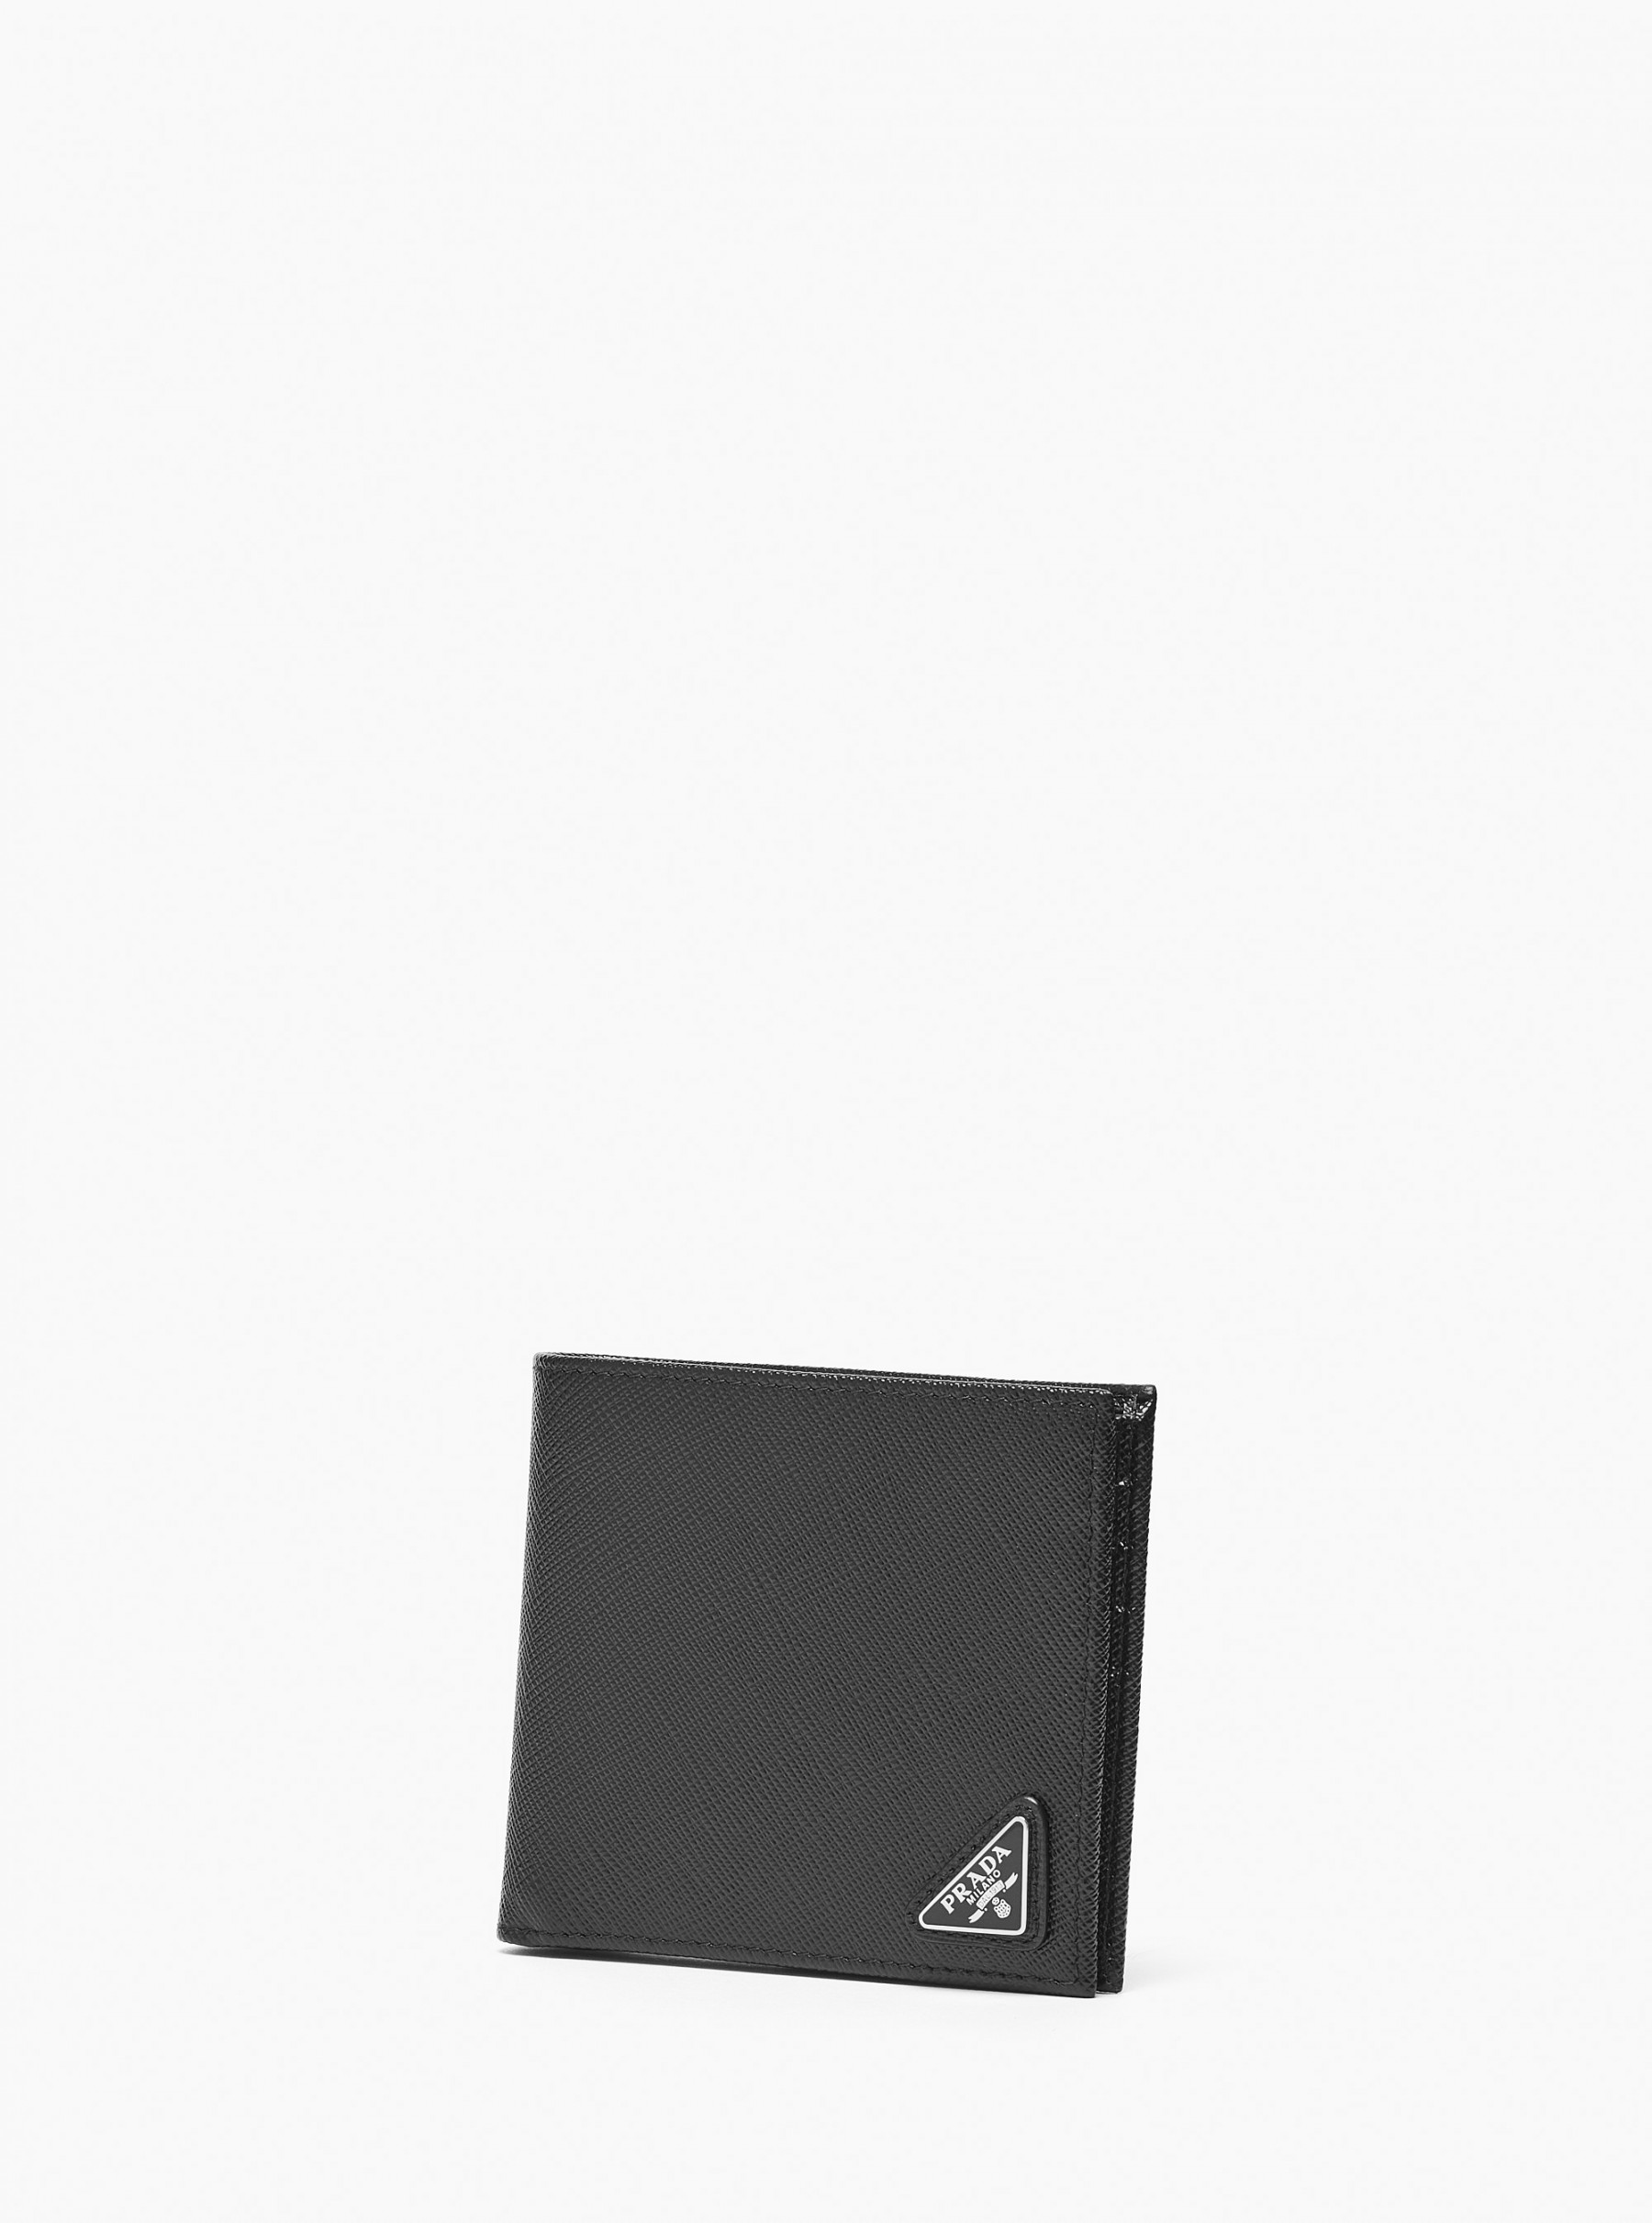 PRADA SAFFIANO LEATHER CARD HOLDER Black/Silver Wallet